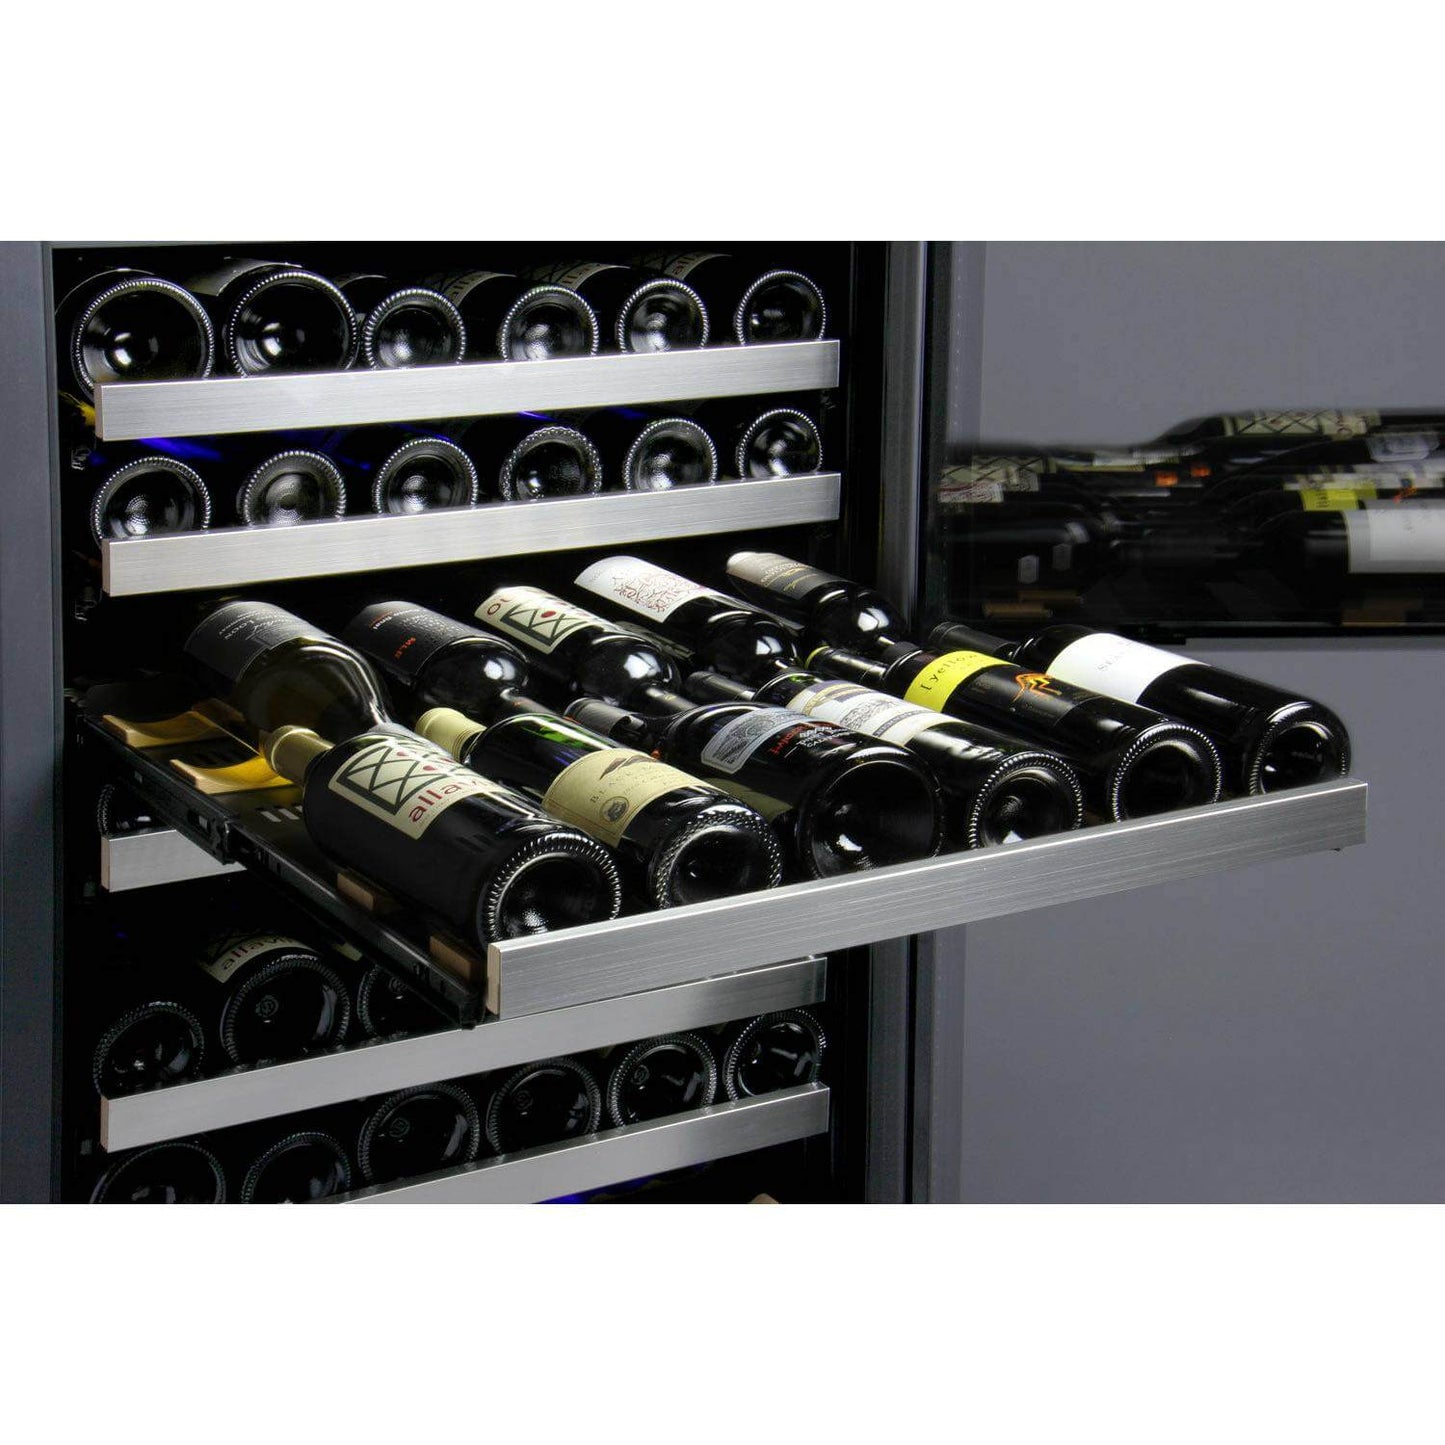 Allavino 24" Wide FlexCount II Tru-Vino 172 Bottle Dual Zone Stainless Steel Wine Refrigerator